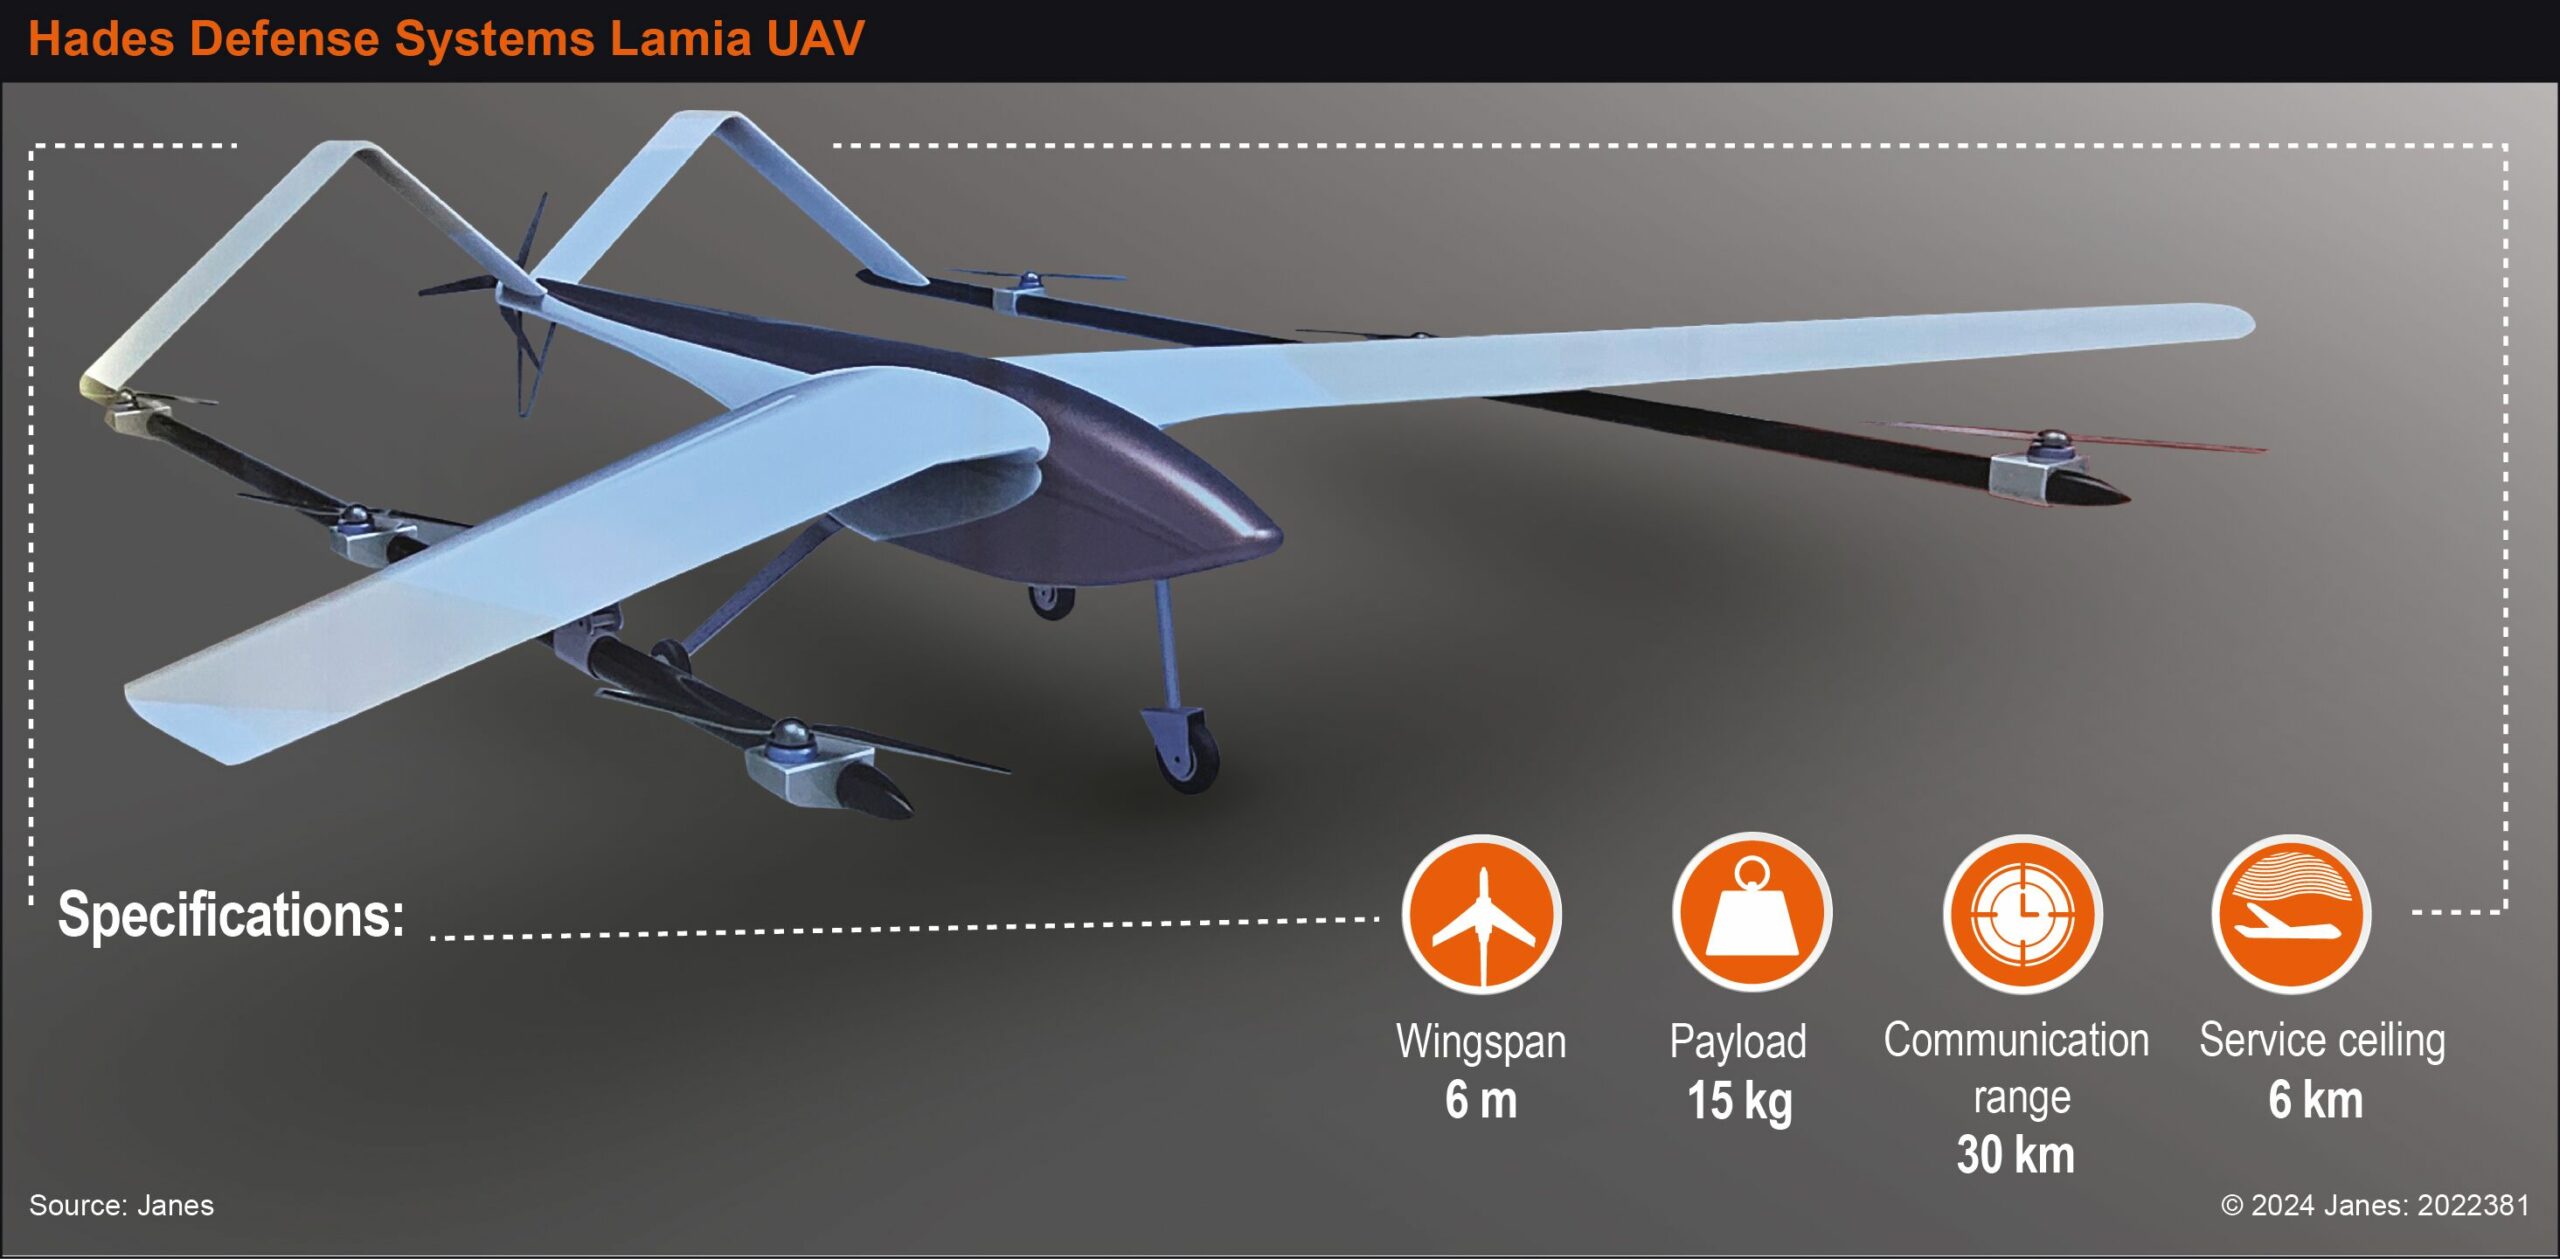 UMEX 2024: Sistem Pertahanan Hades mengembangkan UAV multiguna Lamia